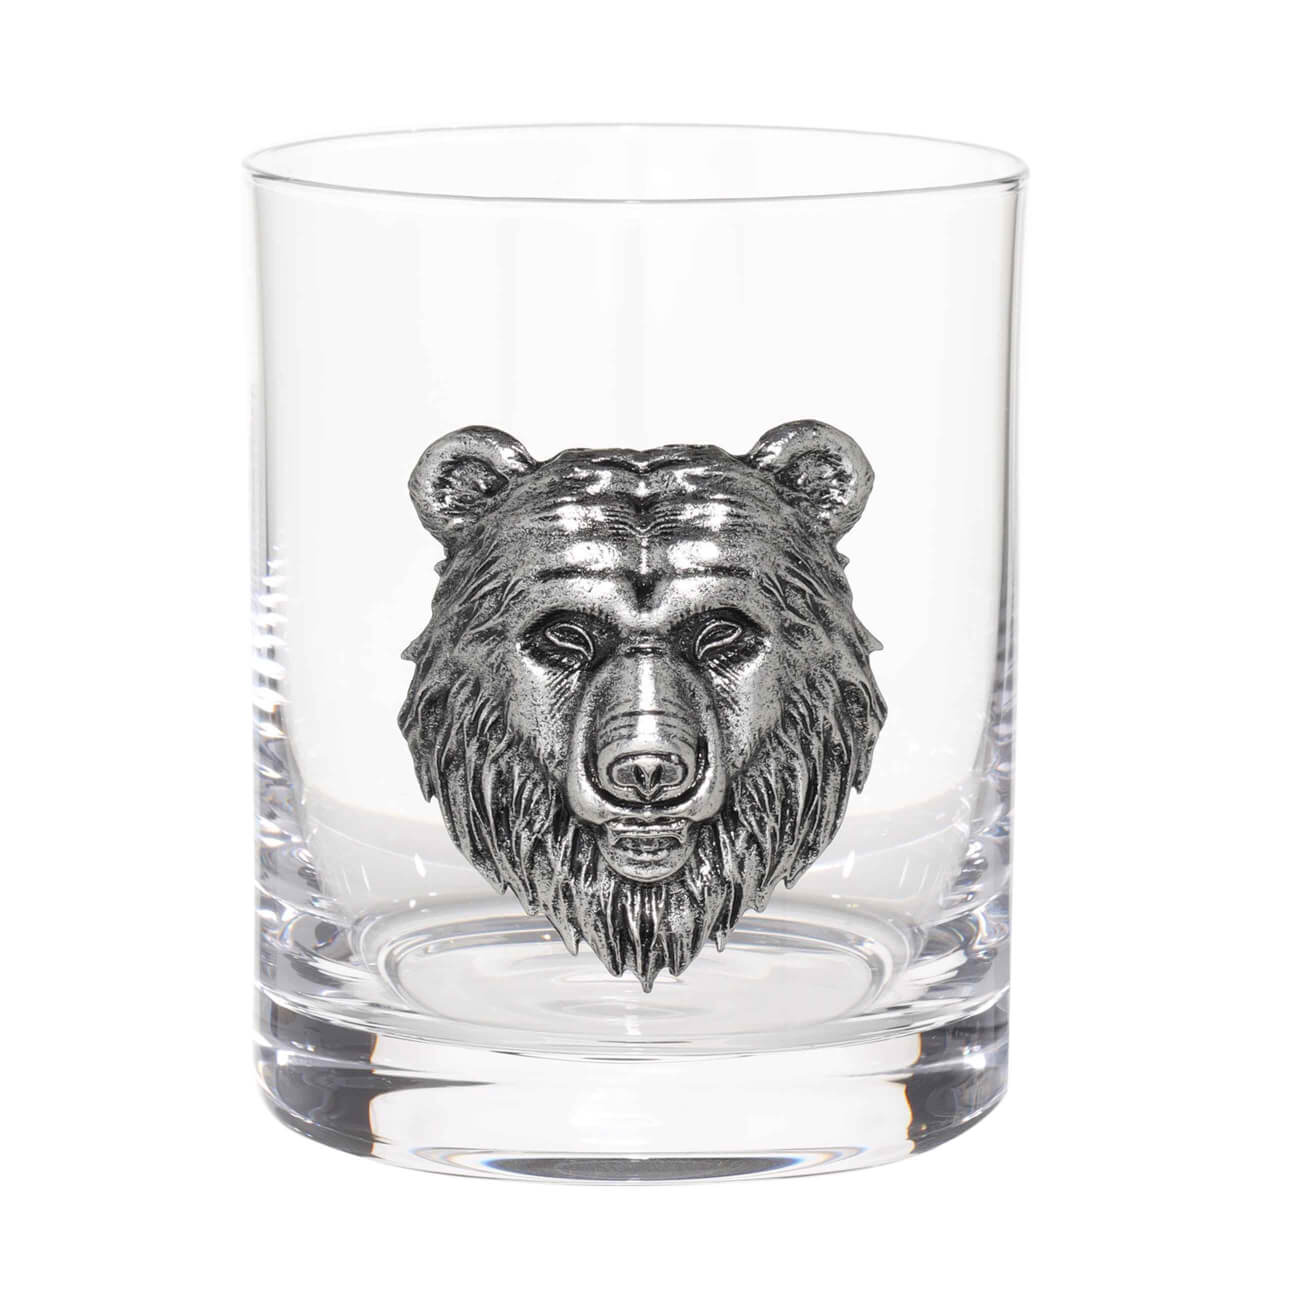 Стакан для виски, 10 см, 340 мл, стекло/металл, серебристый, Медведь, Lux elements стакан для виски 340 мл стекло металл серебристый медведь lux elements